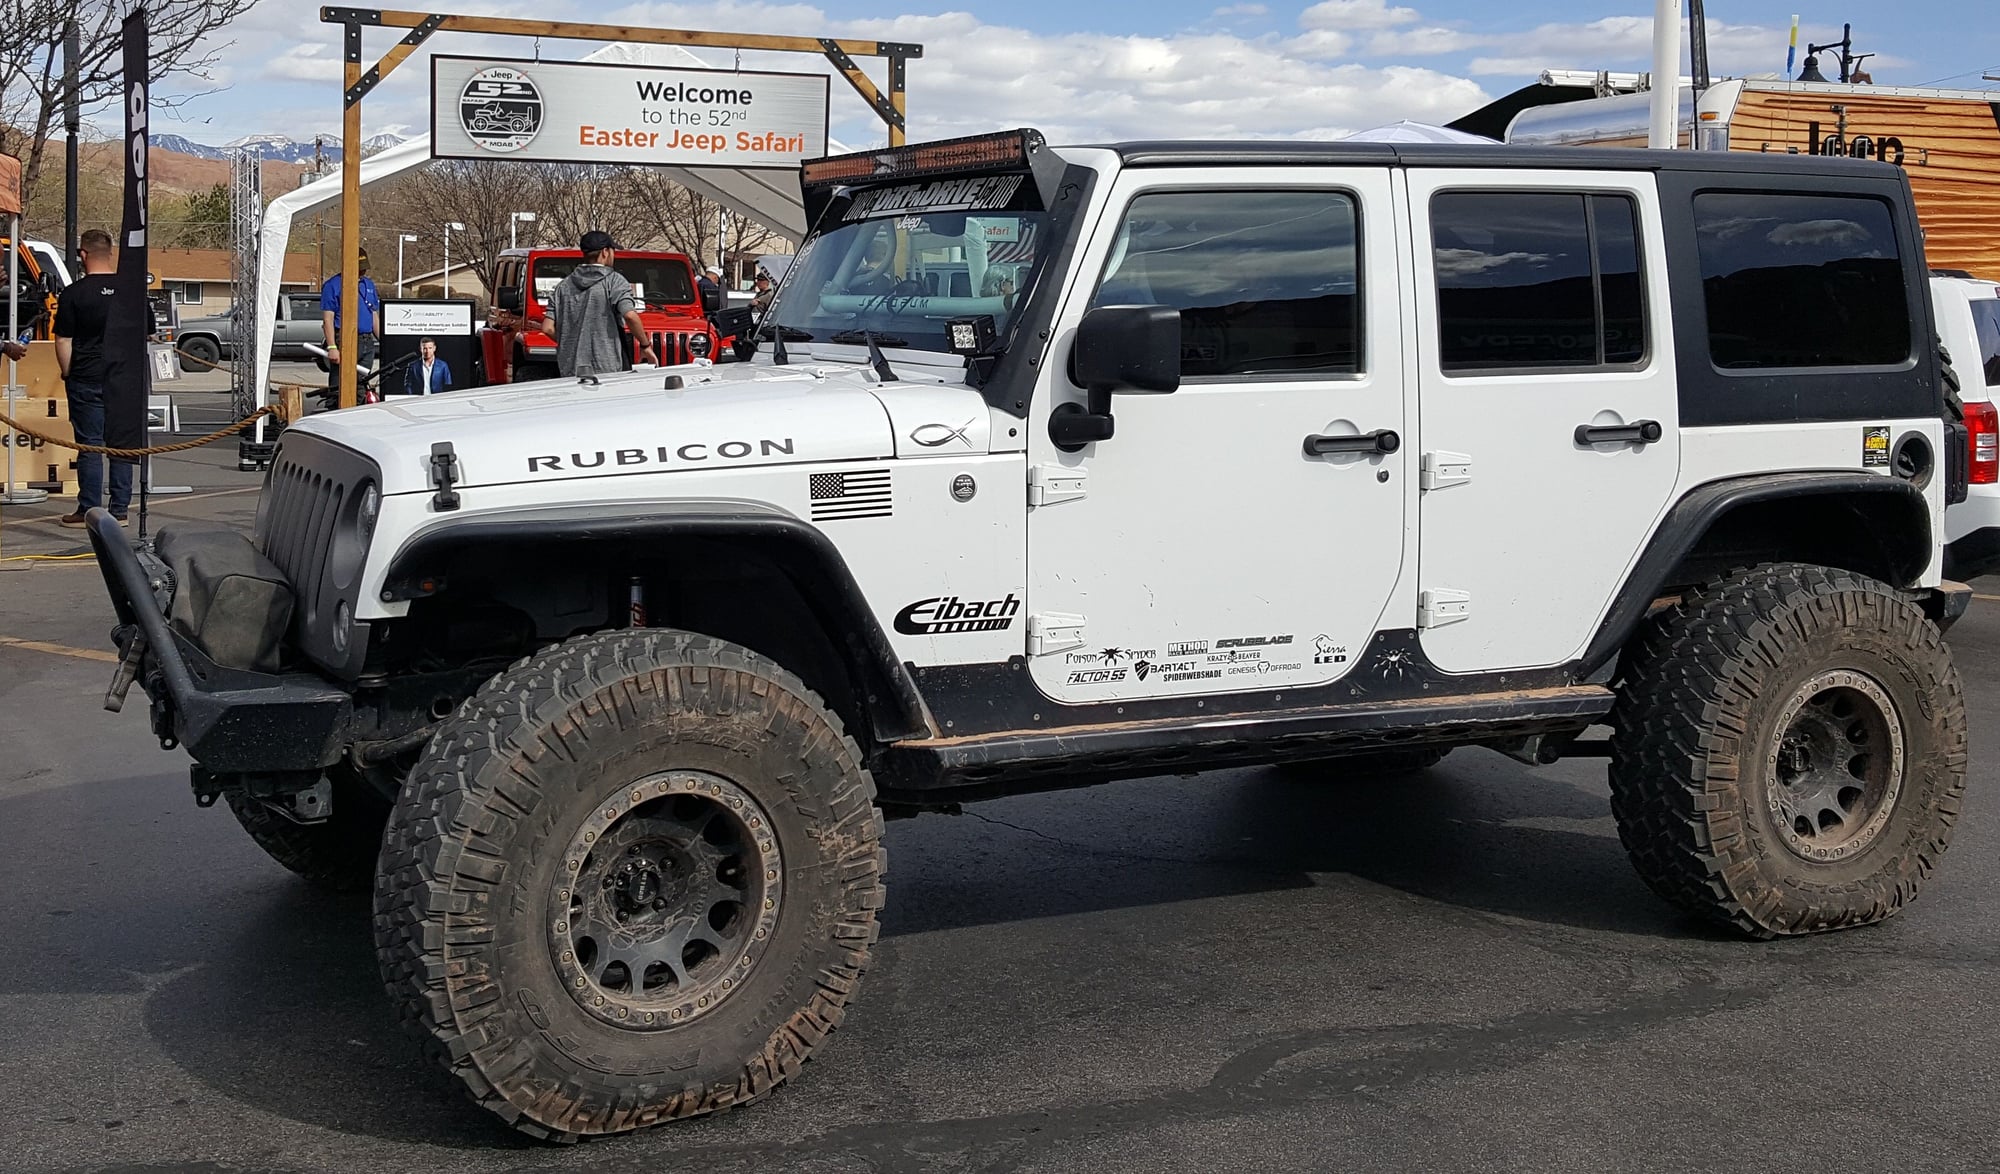 2013 Jeep Wrangler - '13 jkur  -  $45,678.90 - Used - VIN 1C4BJWFG3DL526897 - 90,750 Miles - 6 cyl - 4WD - Automatic - White - Anaheim, CA 92805, United States